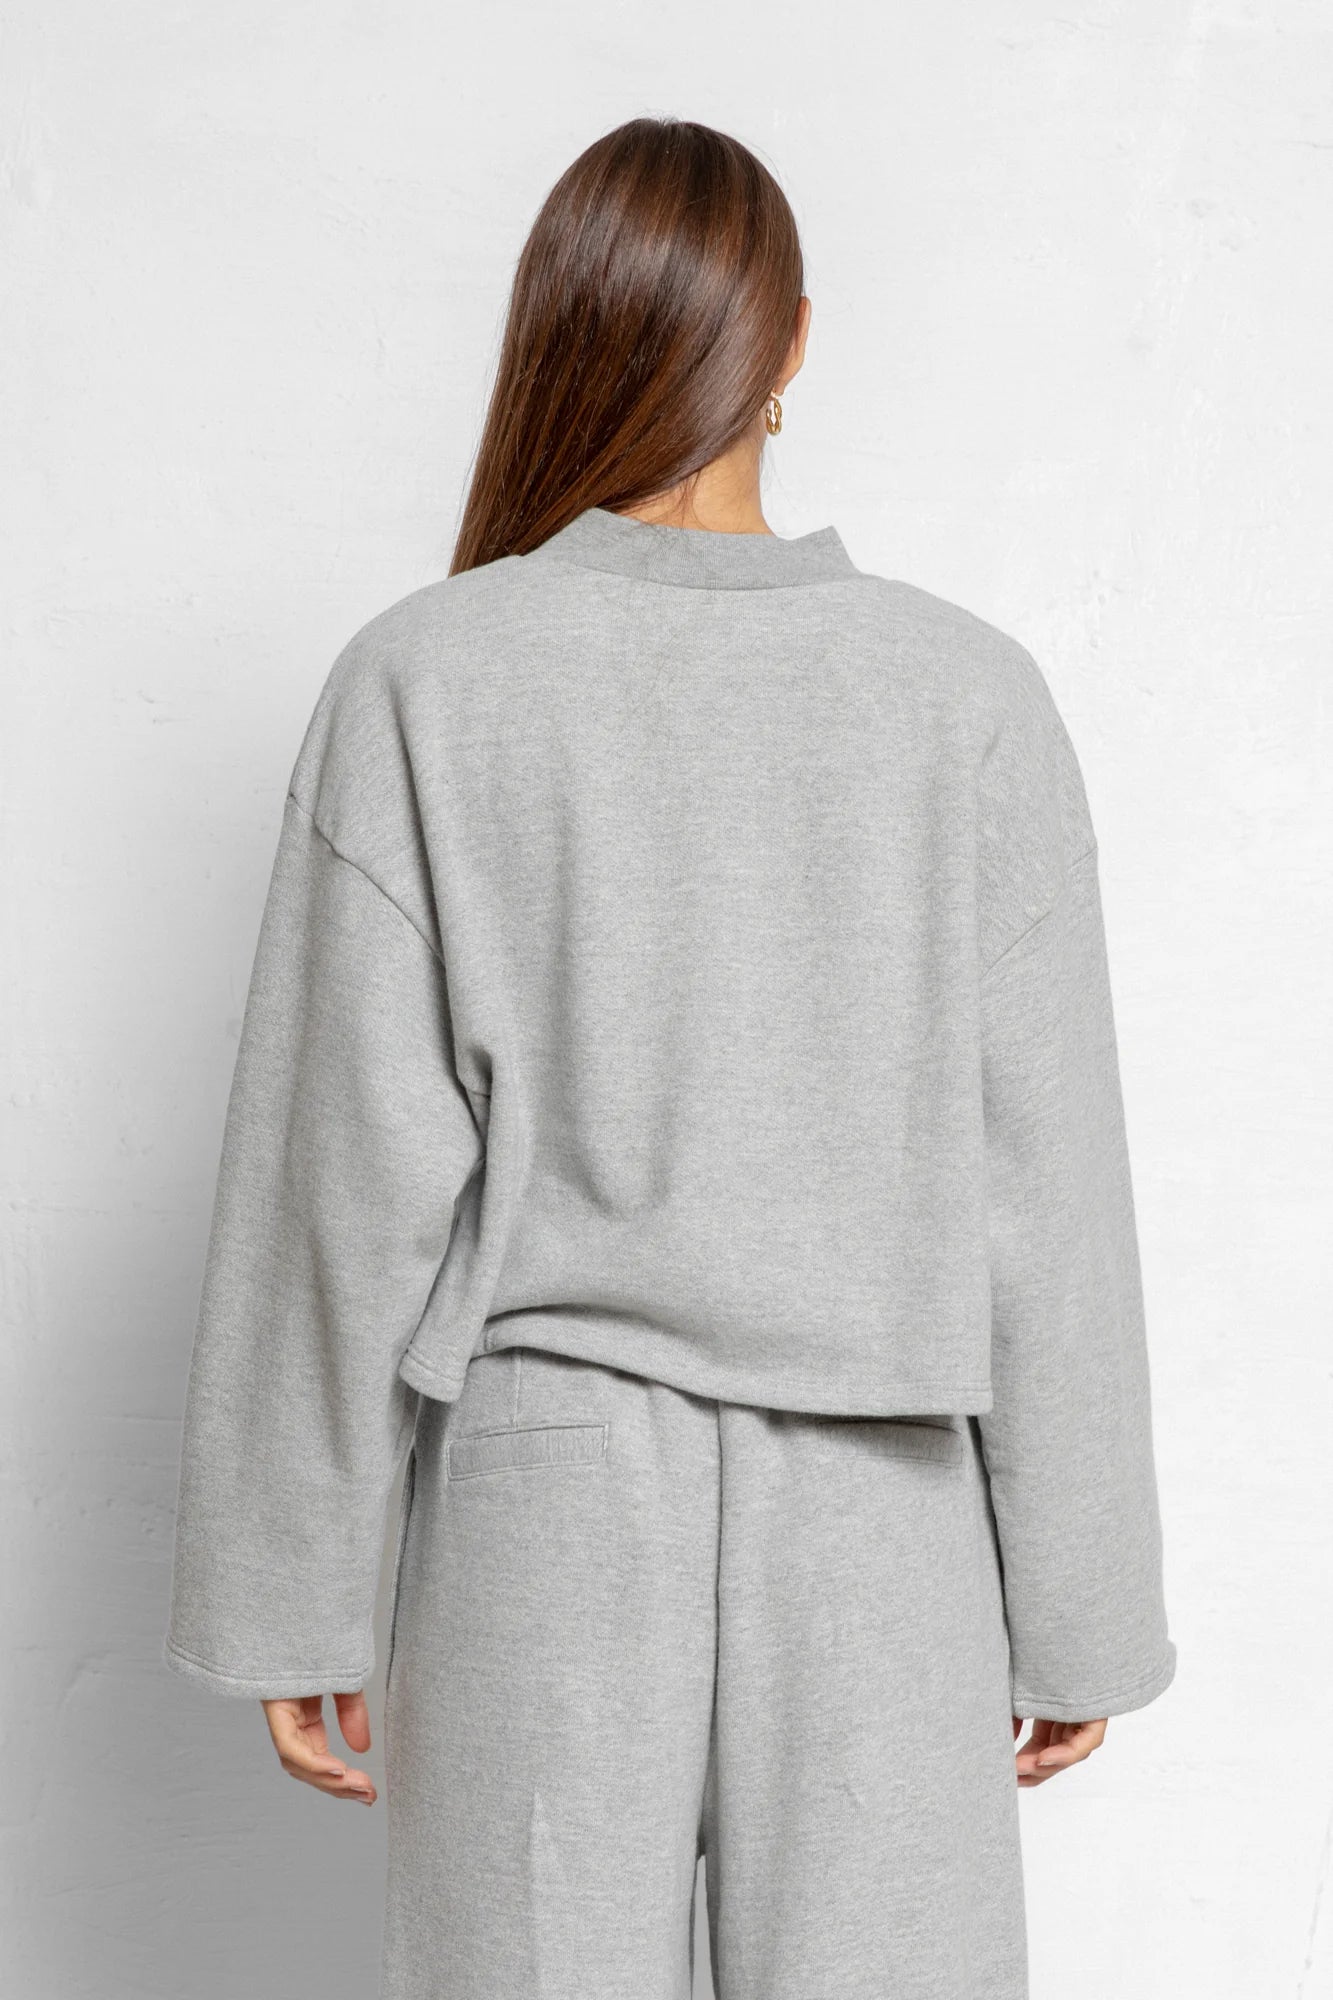 Catalina sweater in heather grey